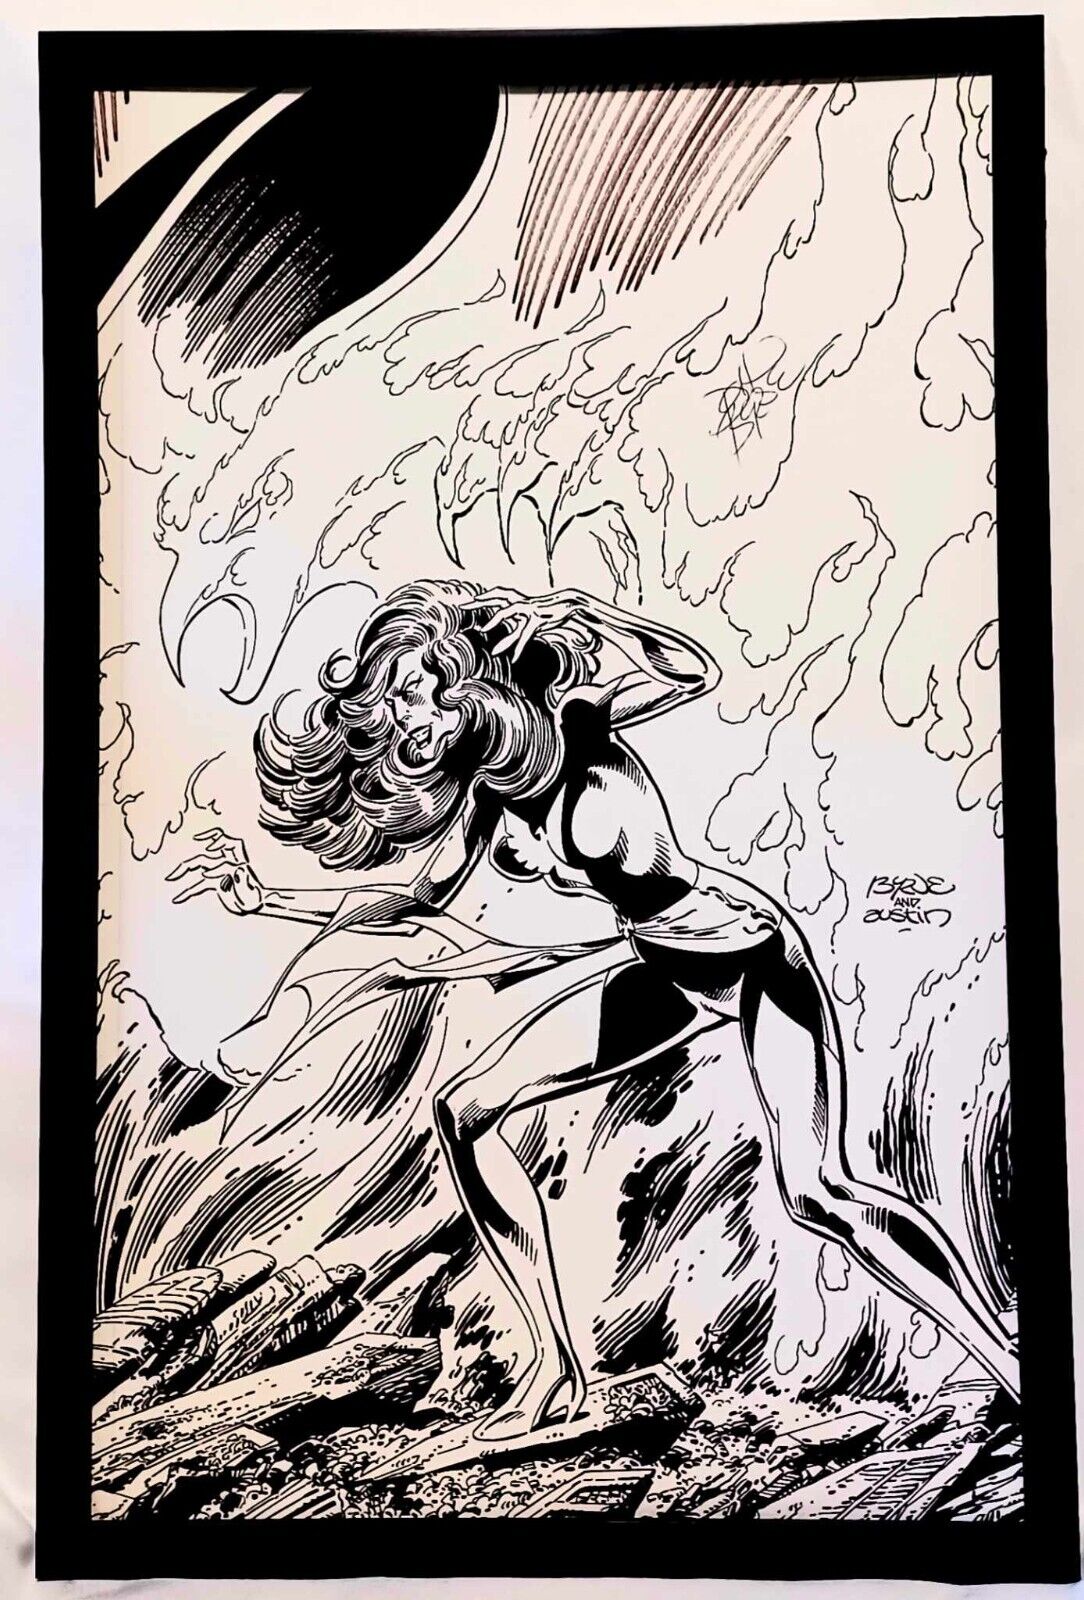 Phoenix the Untold Story #1 by John Byrne 11x17 Art Poster Print Marvel Comics